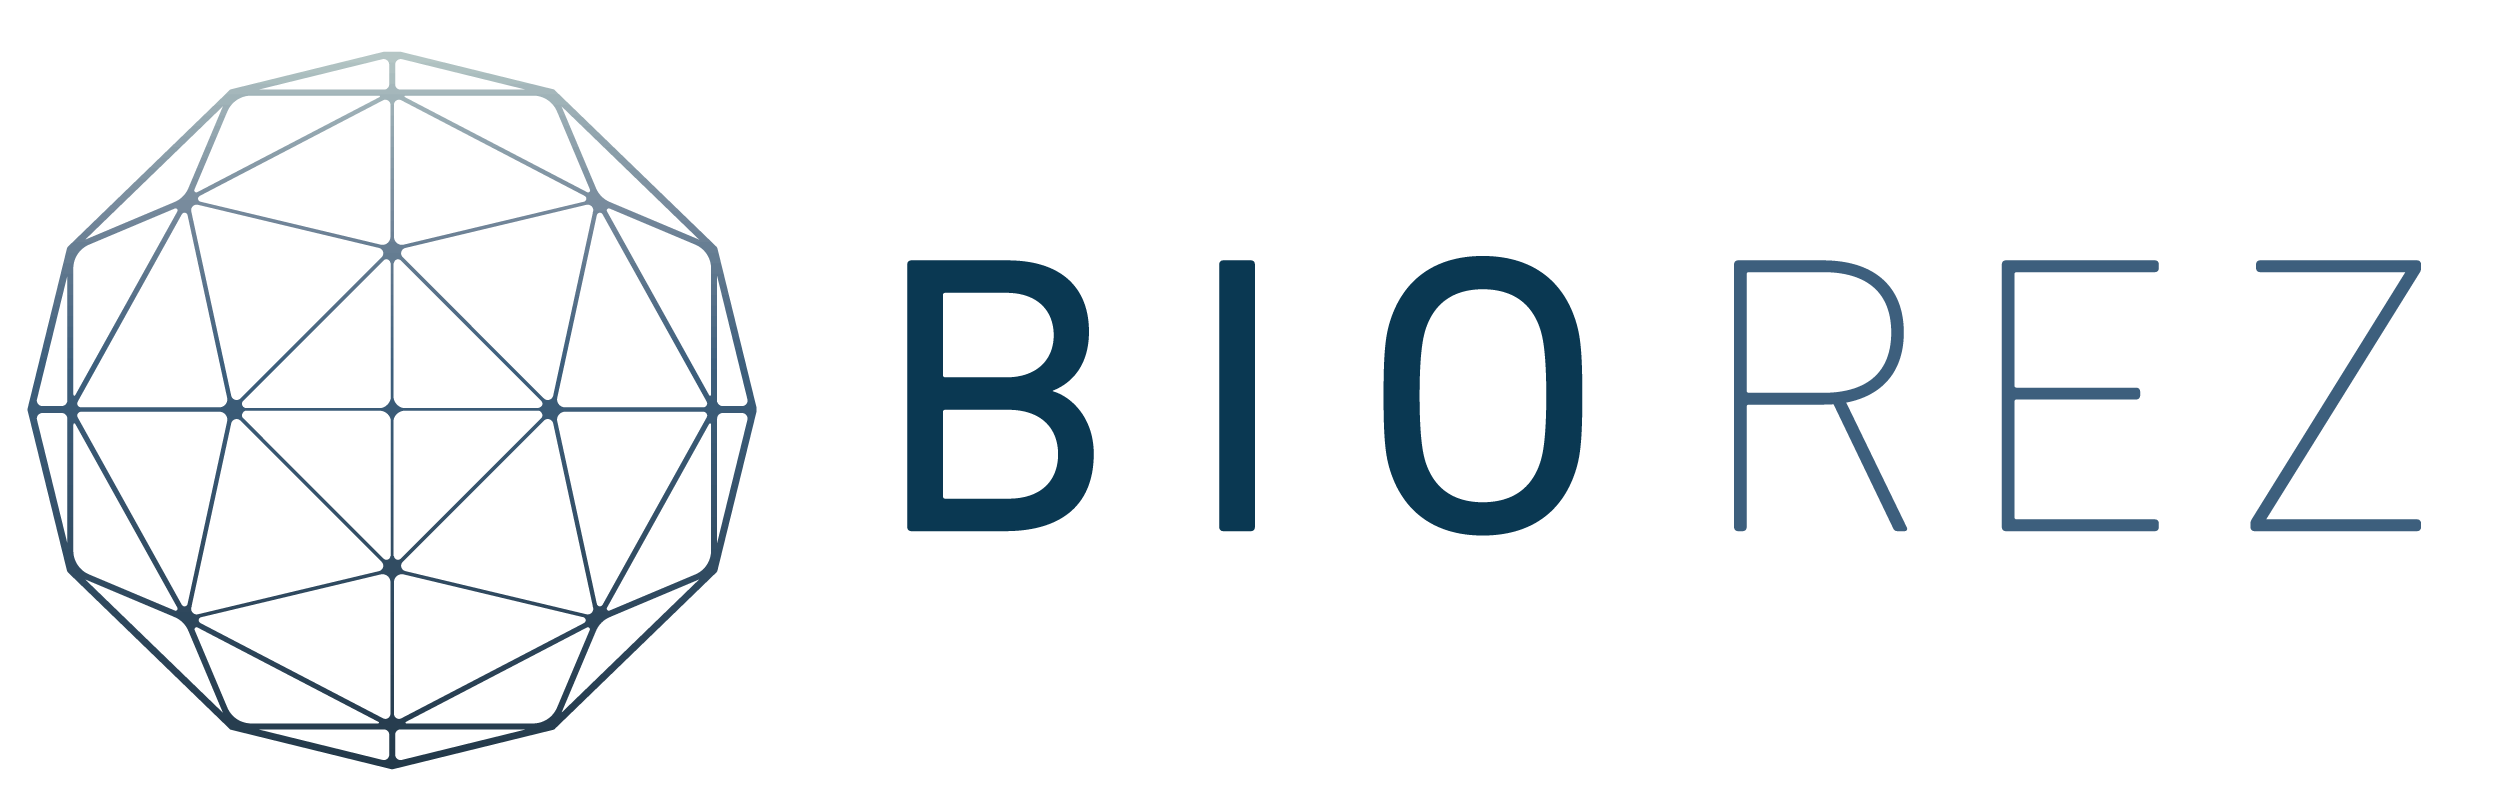 biorez logo